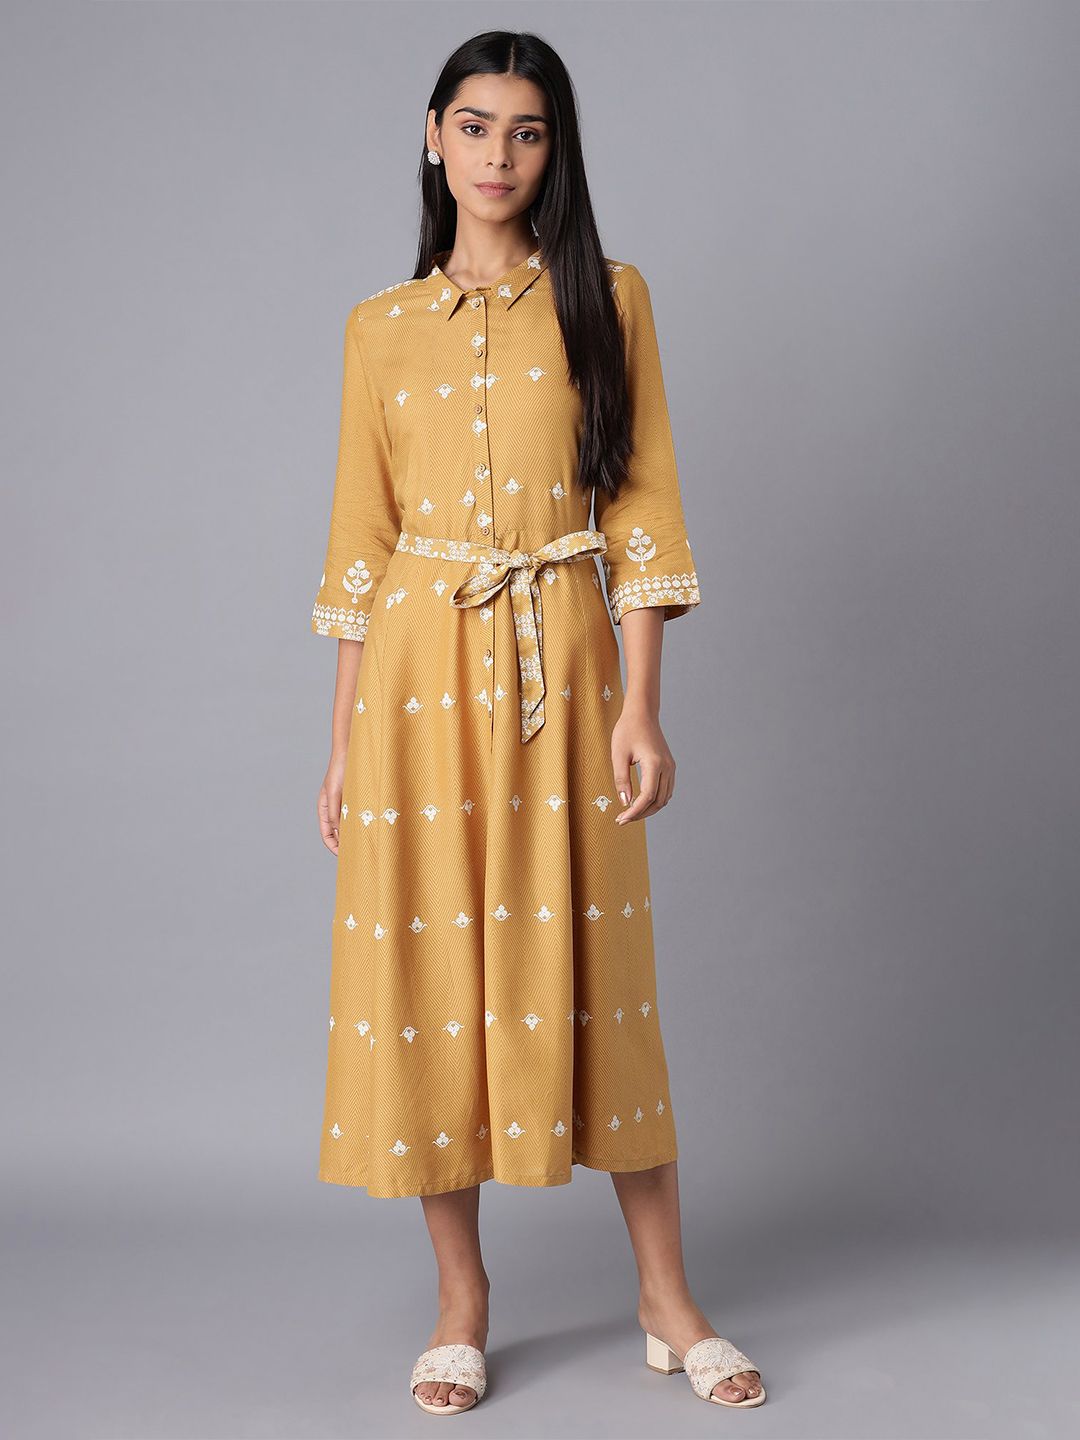 W Yellow Ethnic Motifs A-Line Midi Dress Price in India